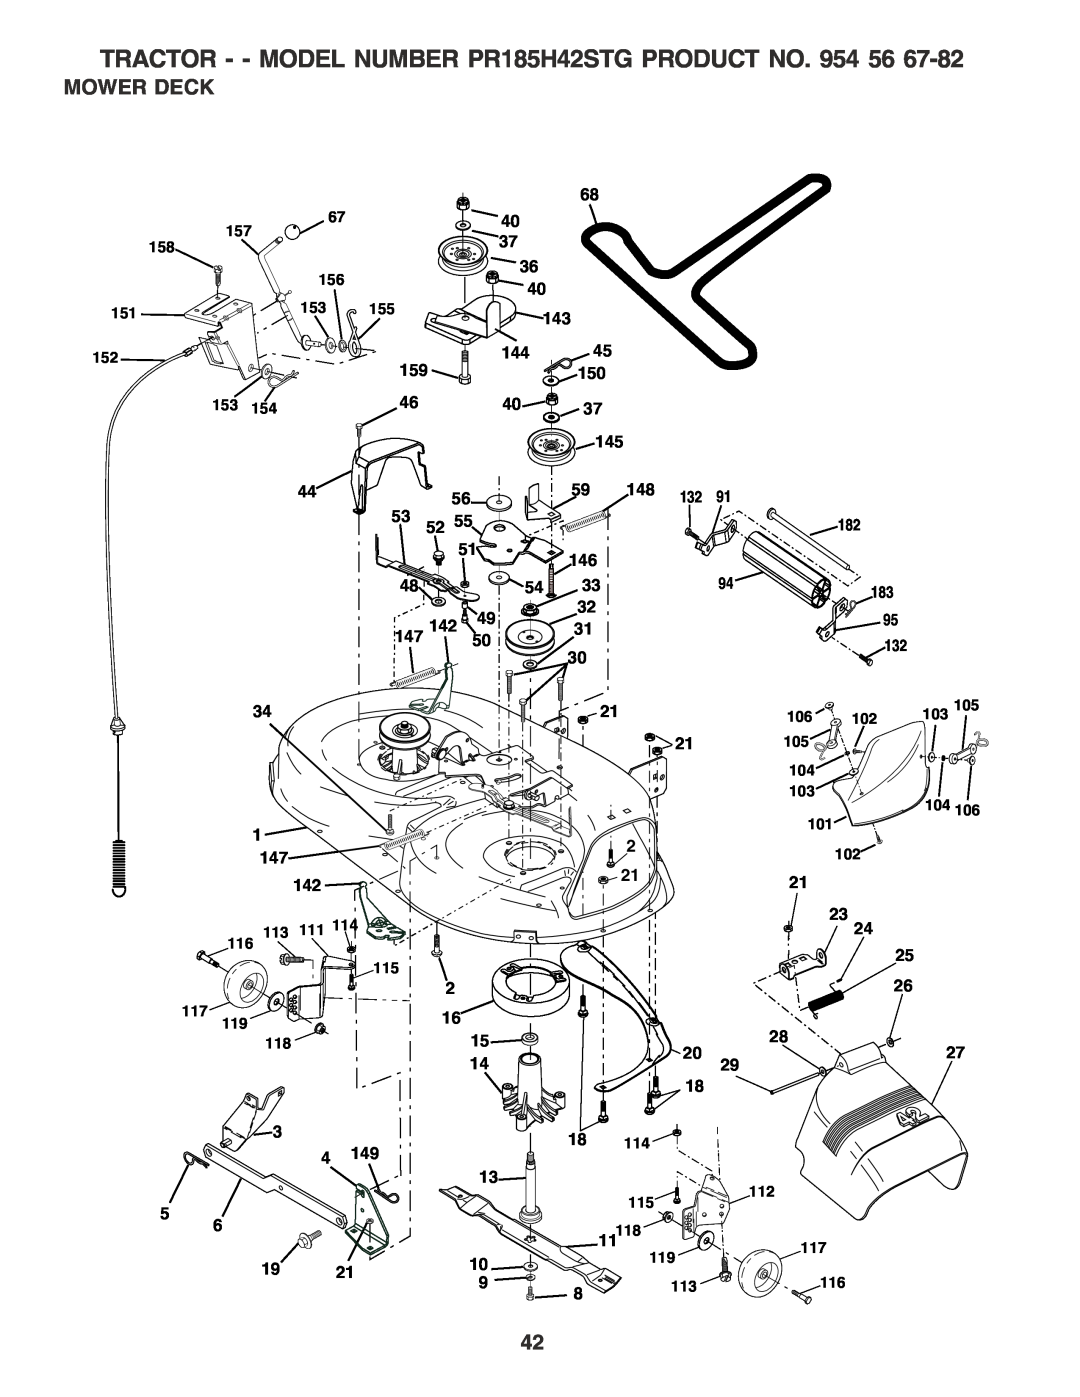 Poulan owner manual Mower Deck, TRACTOR - - MODEL NUMBER PR185H42STG PRODUCT NO. 954 